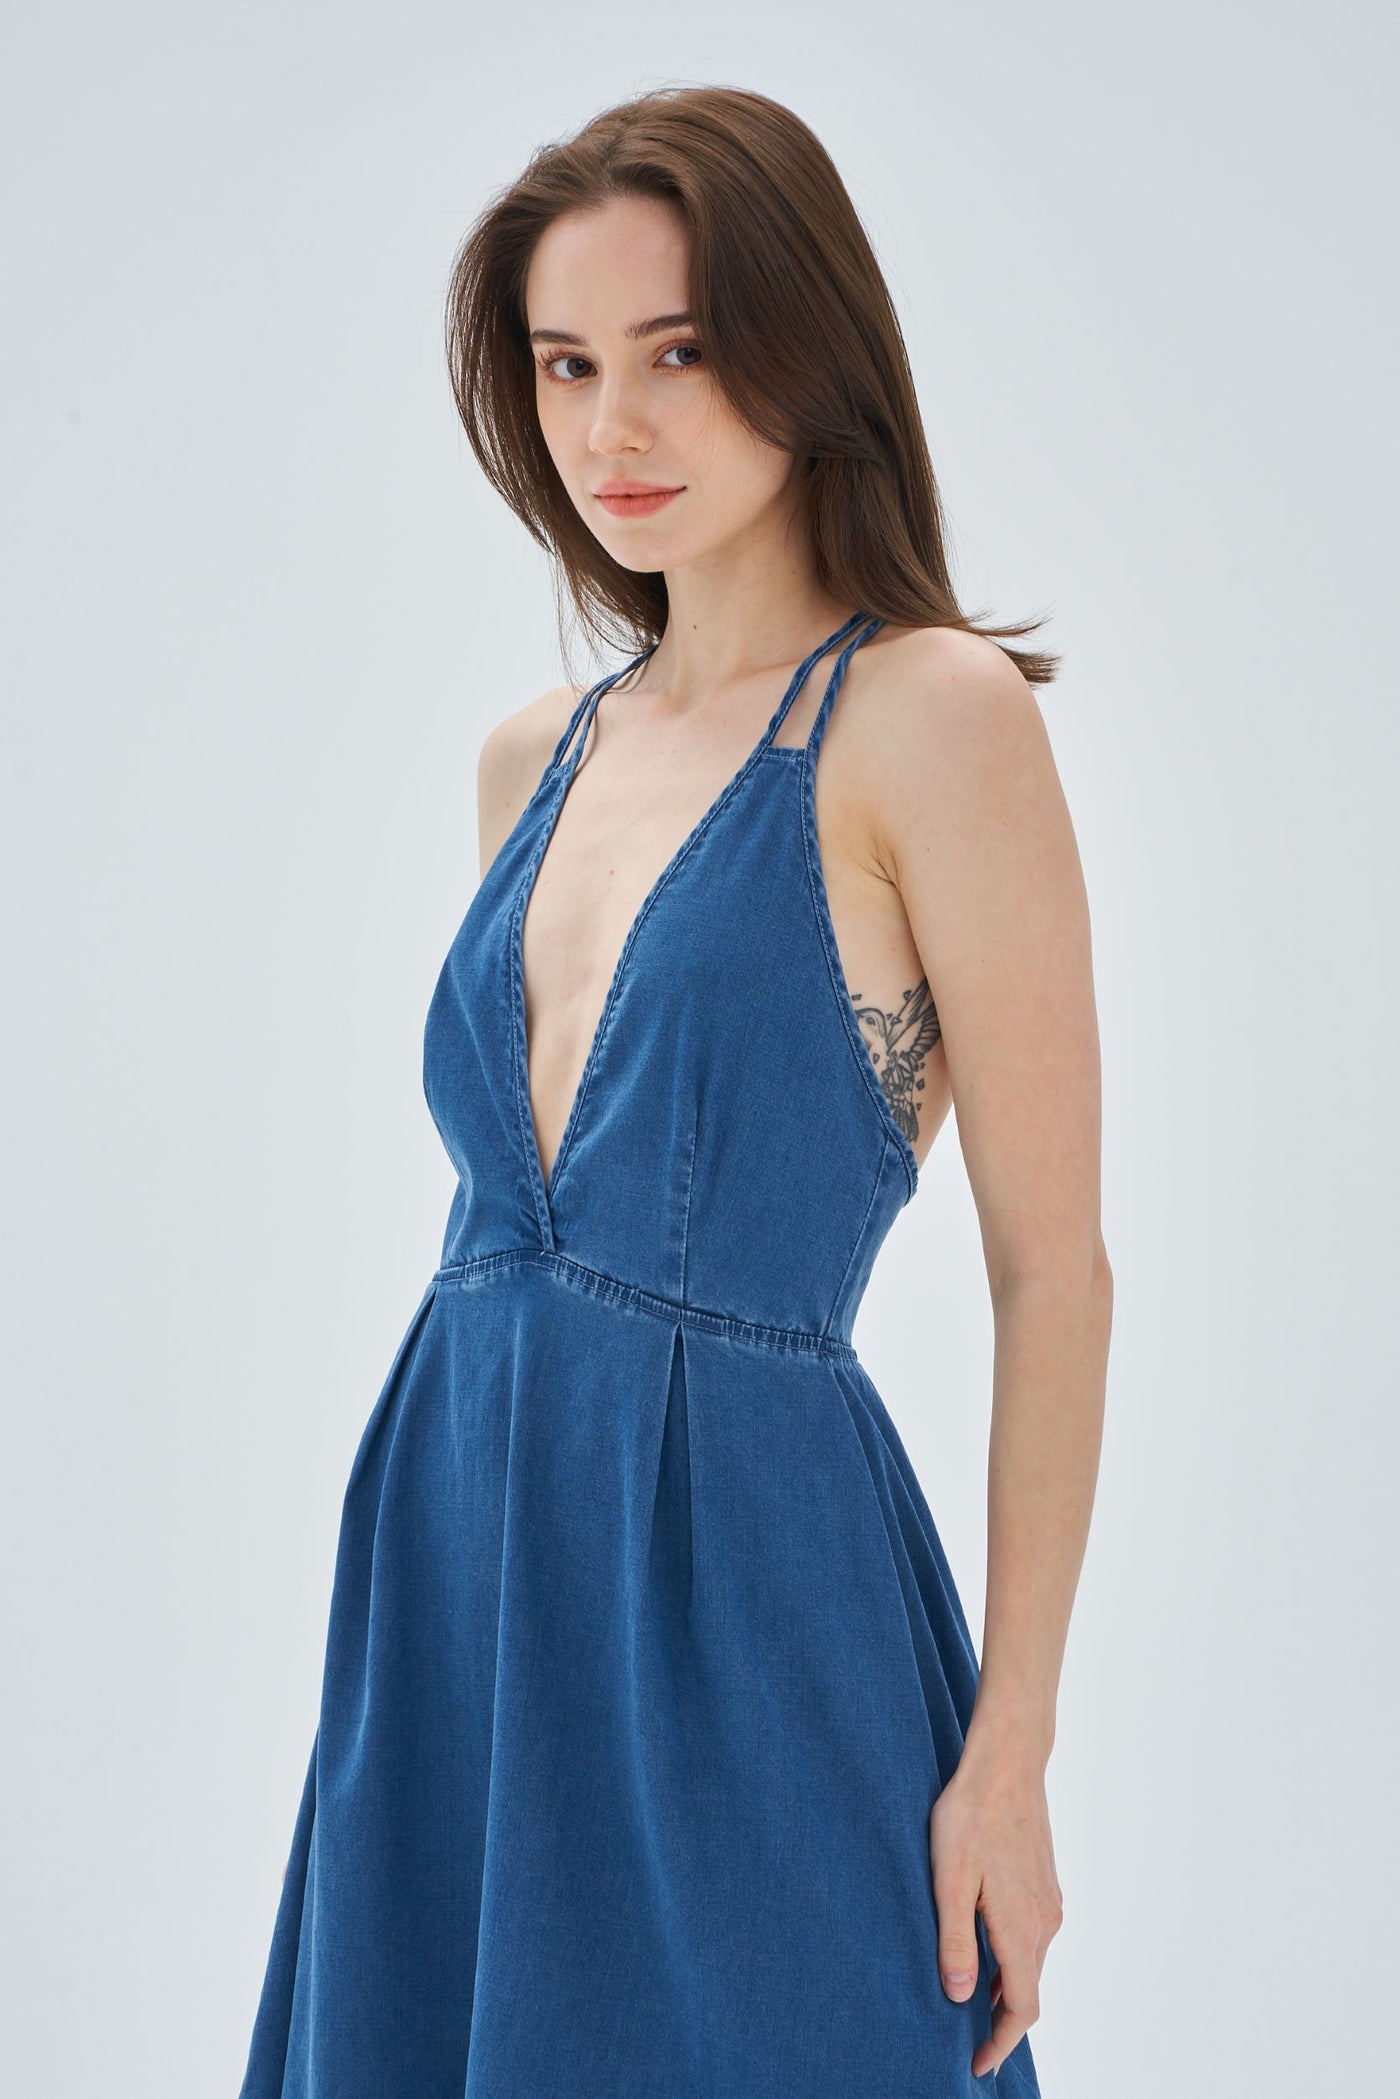 Sexy Women's Striped Blue Rustic V-neck Denim Mini Dress S, M , L | eBay